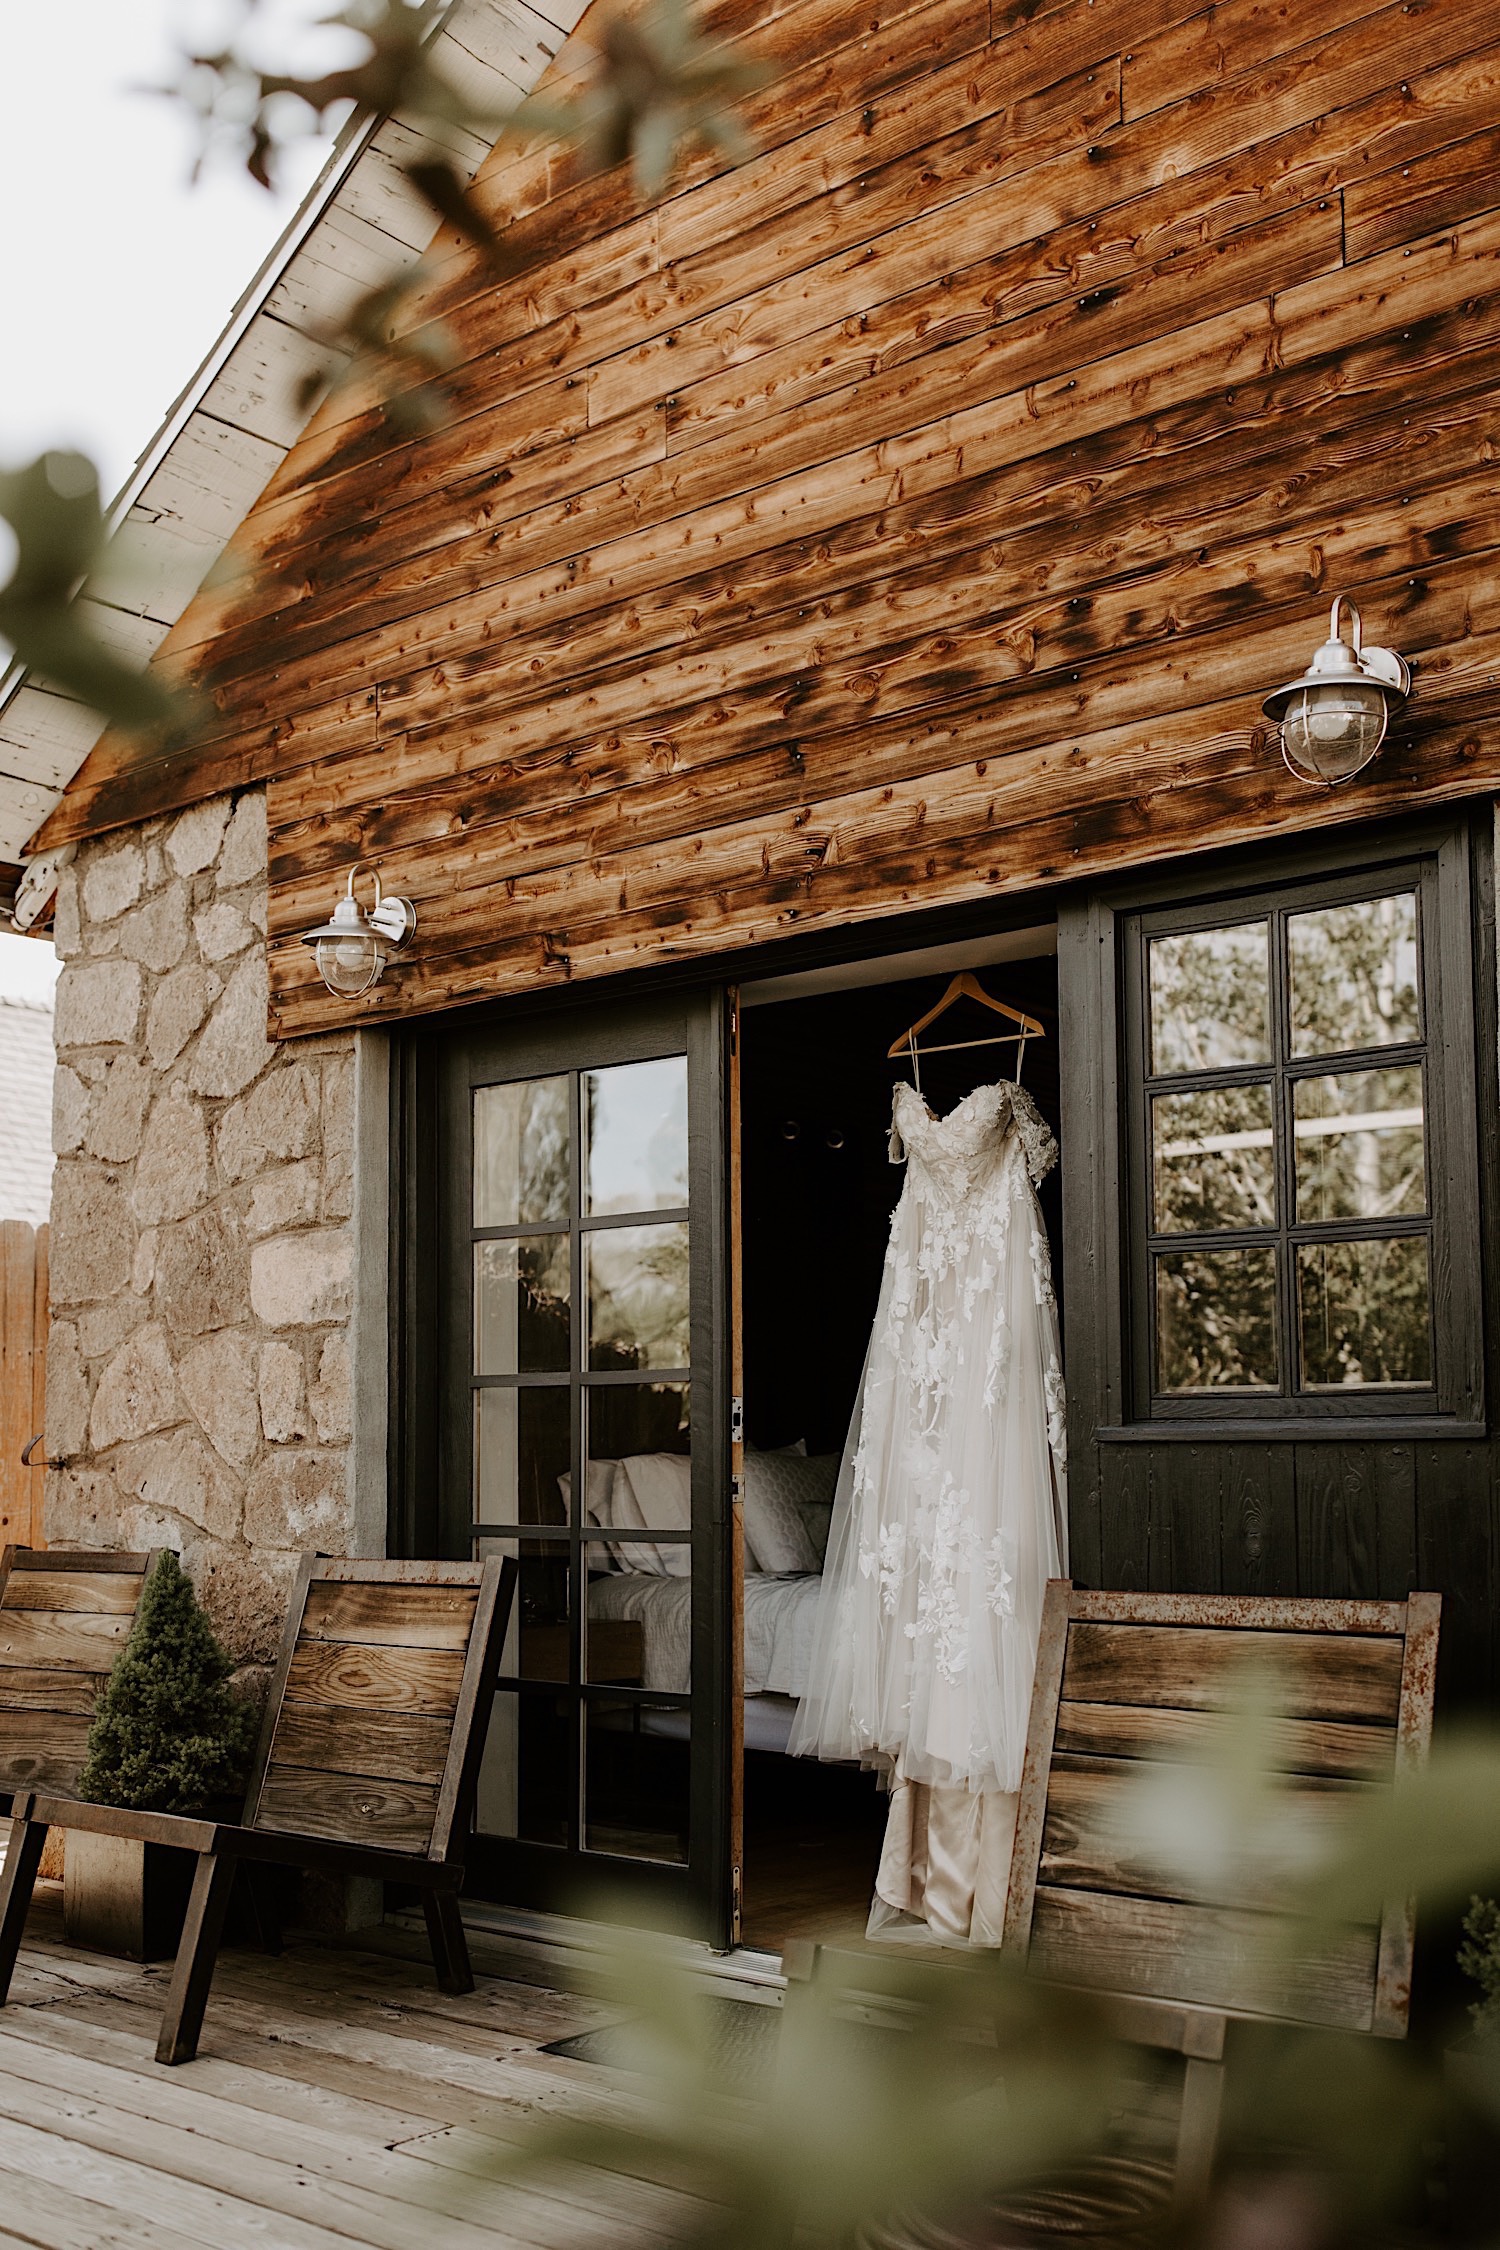 Cabin airbnb wedding dress inspiration